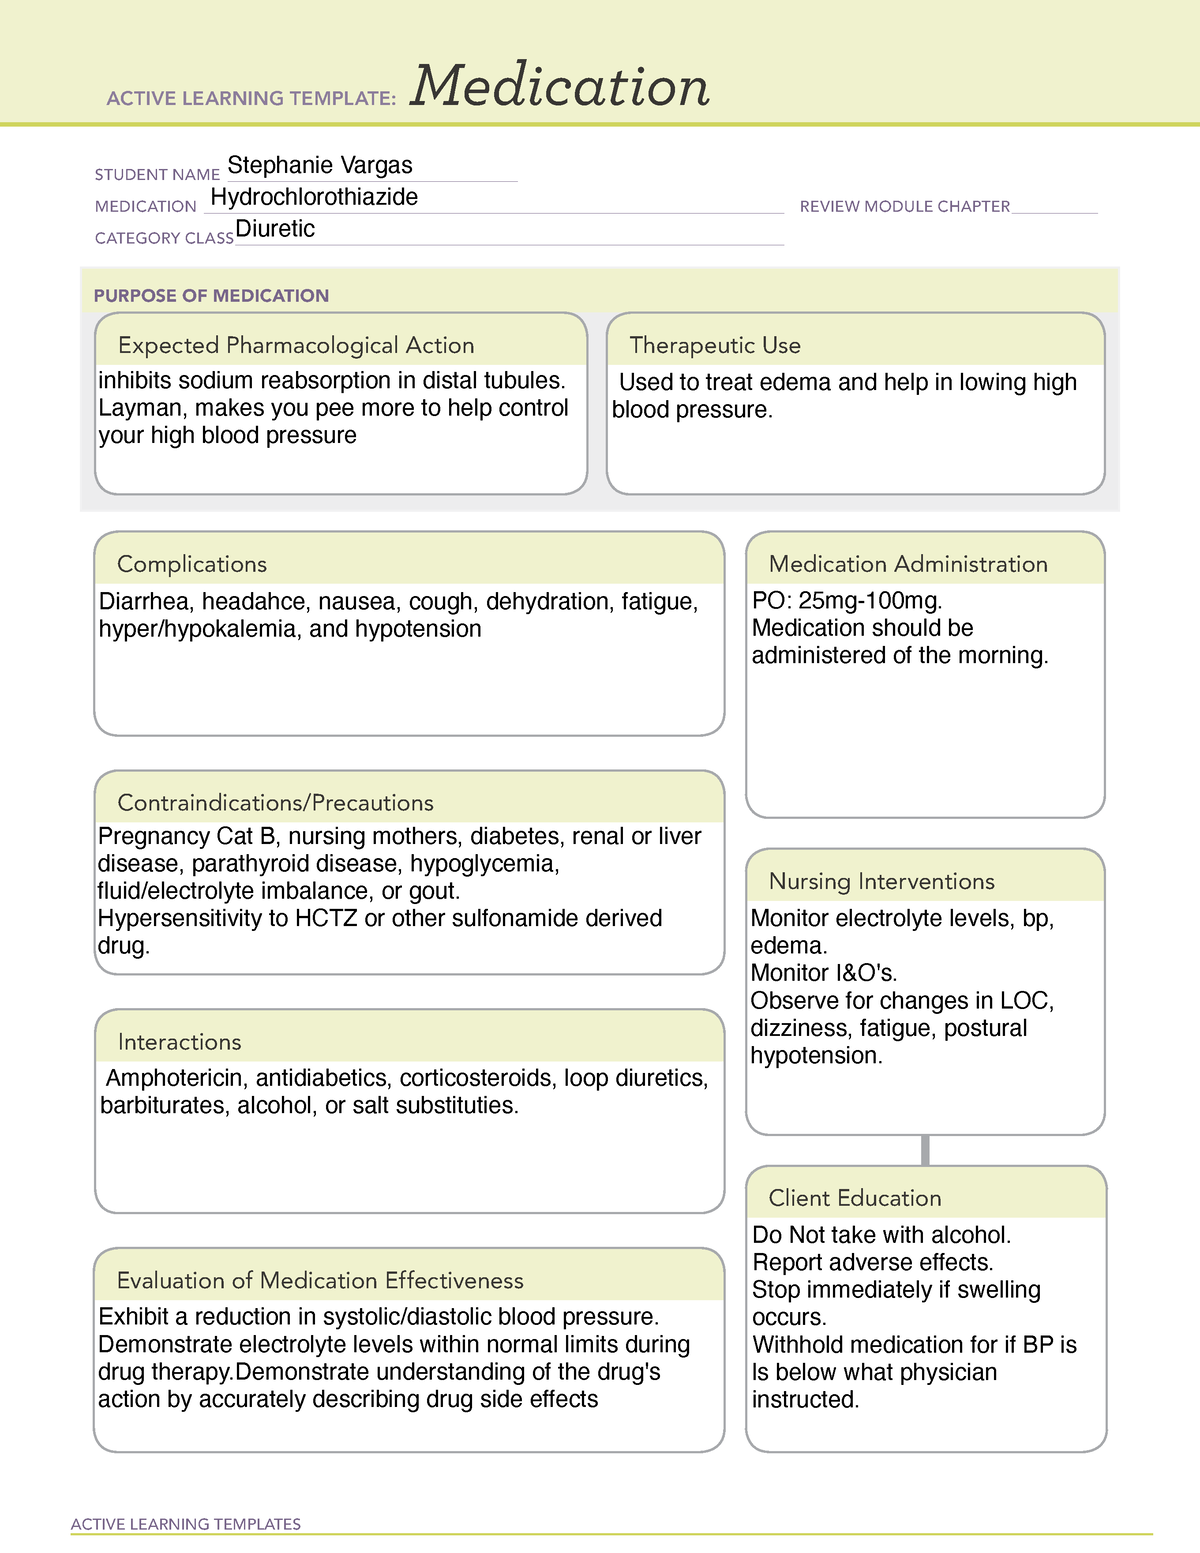 hydrochlorothiazide-medication-card-active-learning-templates